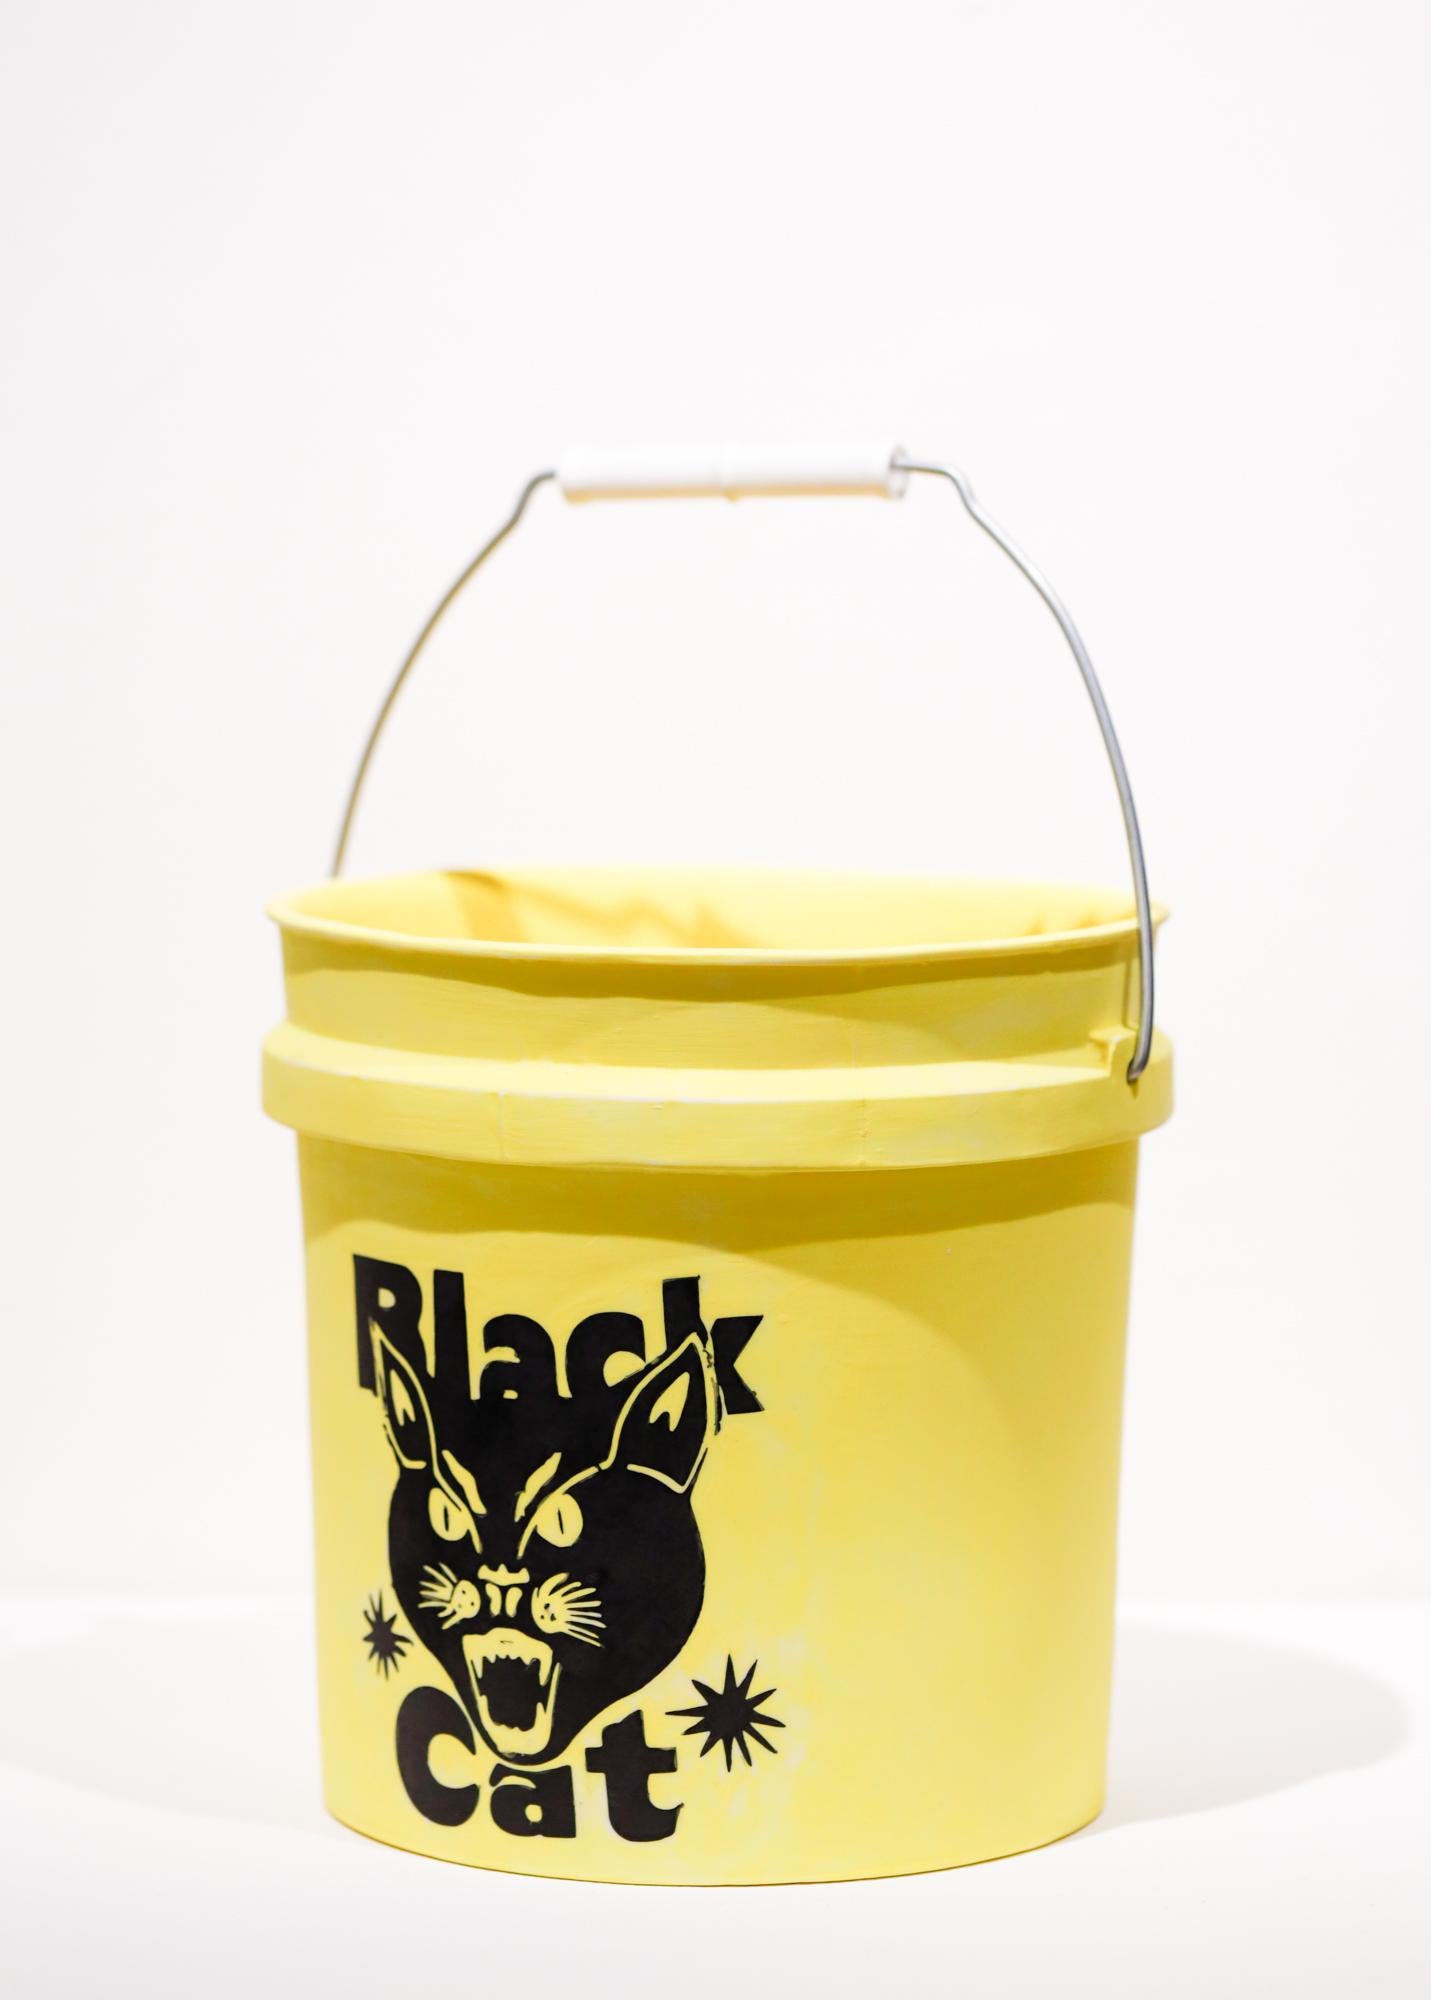 Black Cat Bucket - Sculpture by Brock DeBoer